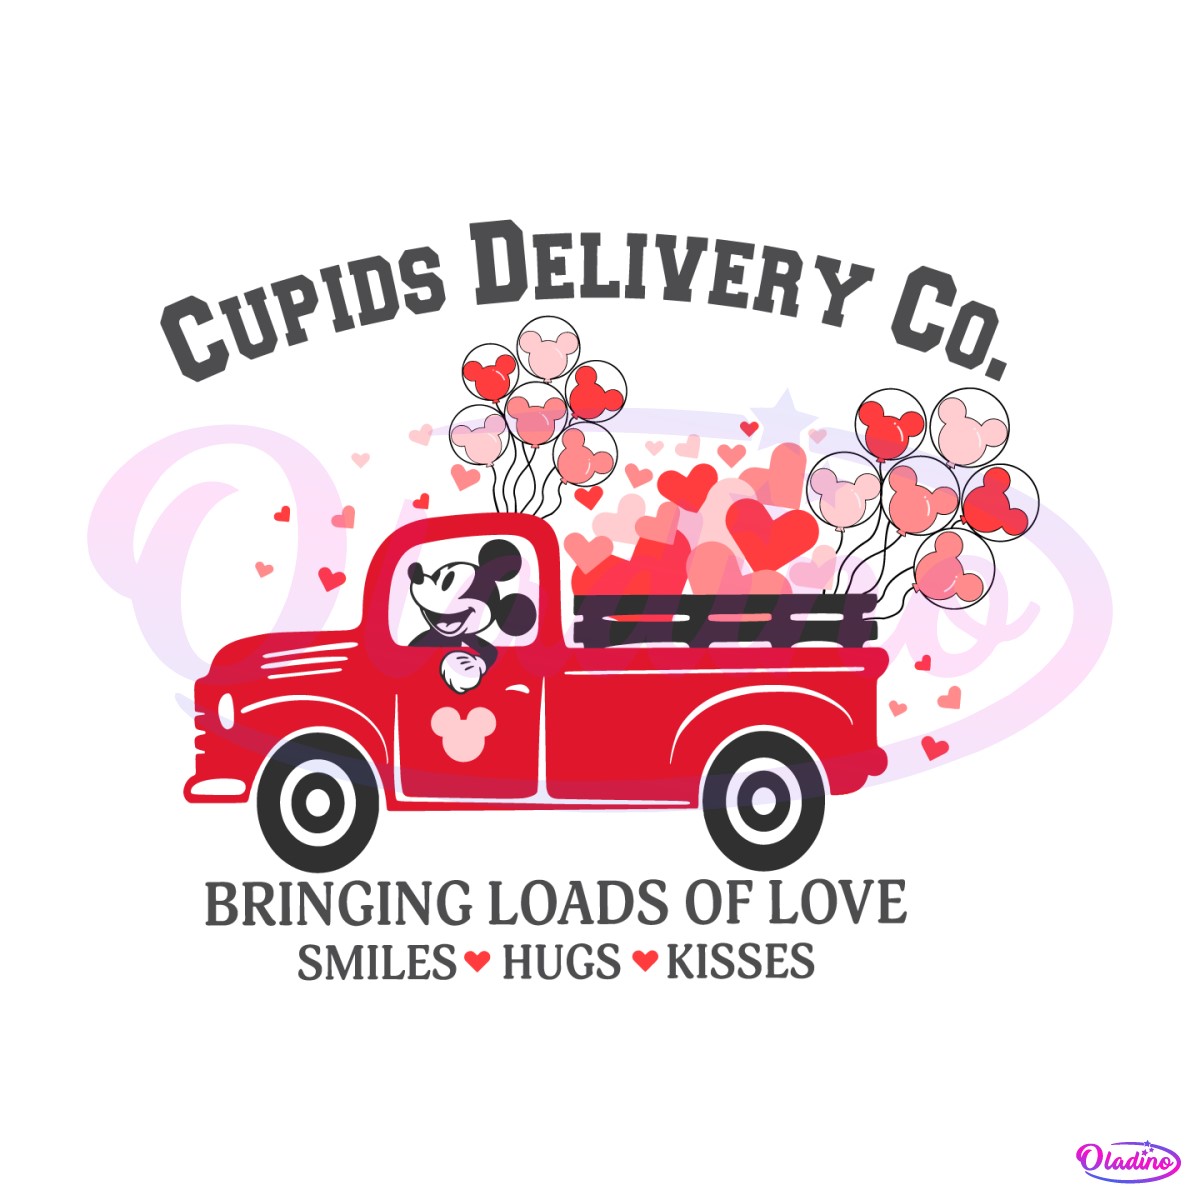 Cupids Delivery Co Bringing Loads Of Love SVG - Valentine's Day SVG